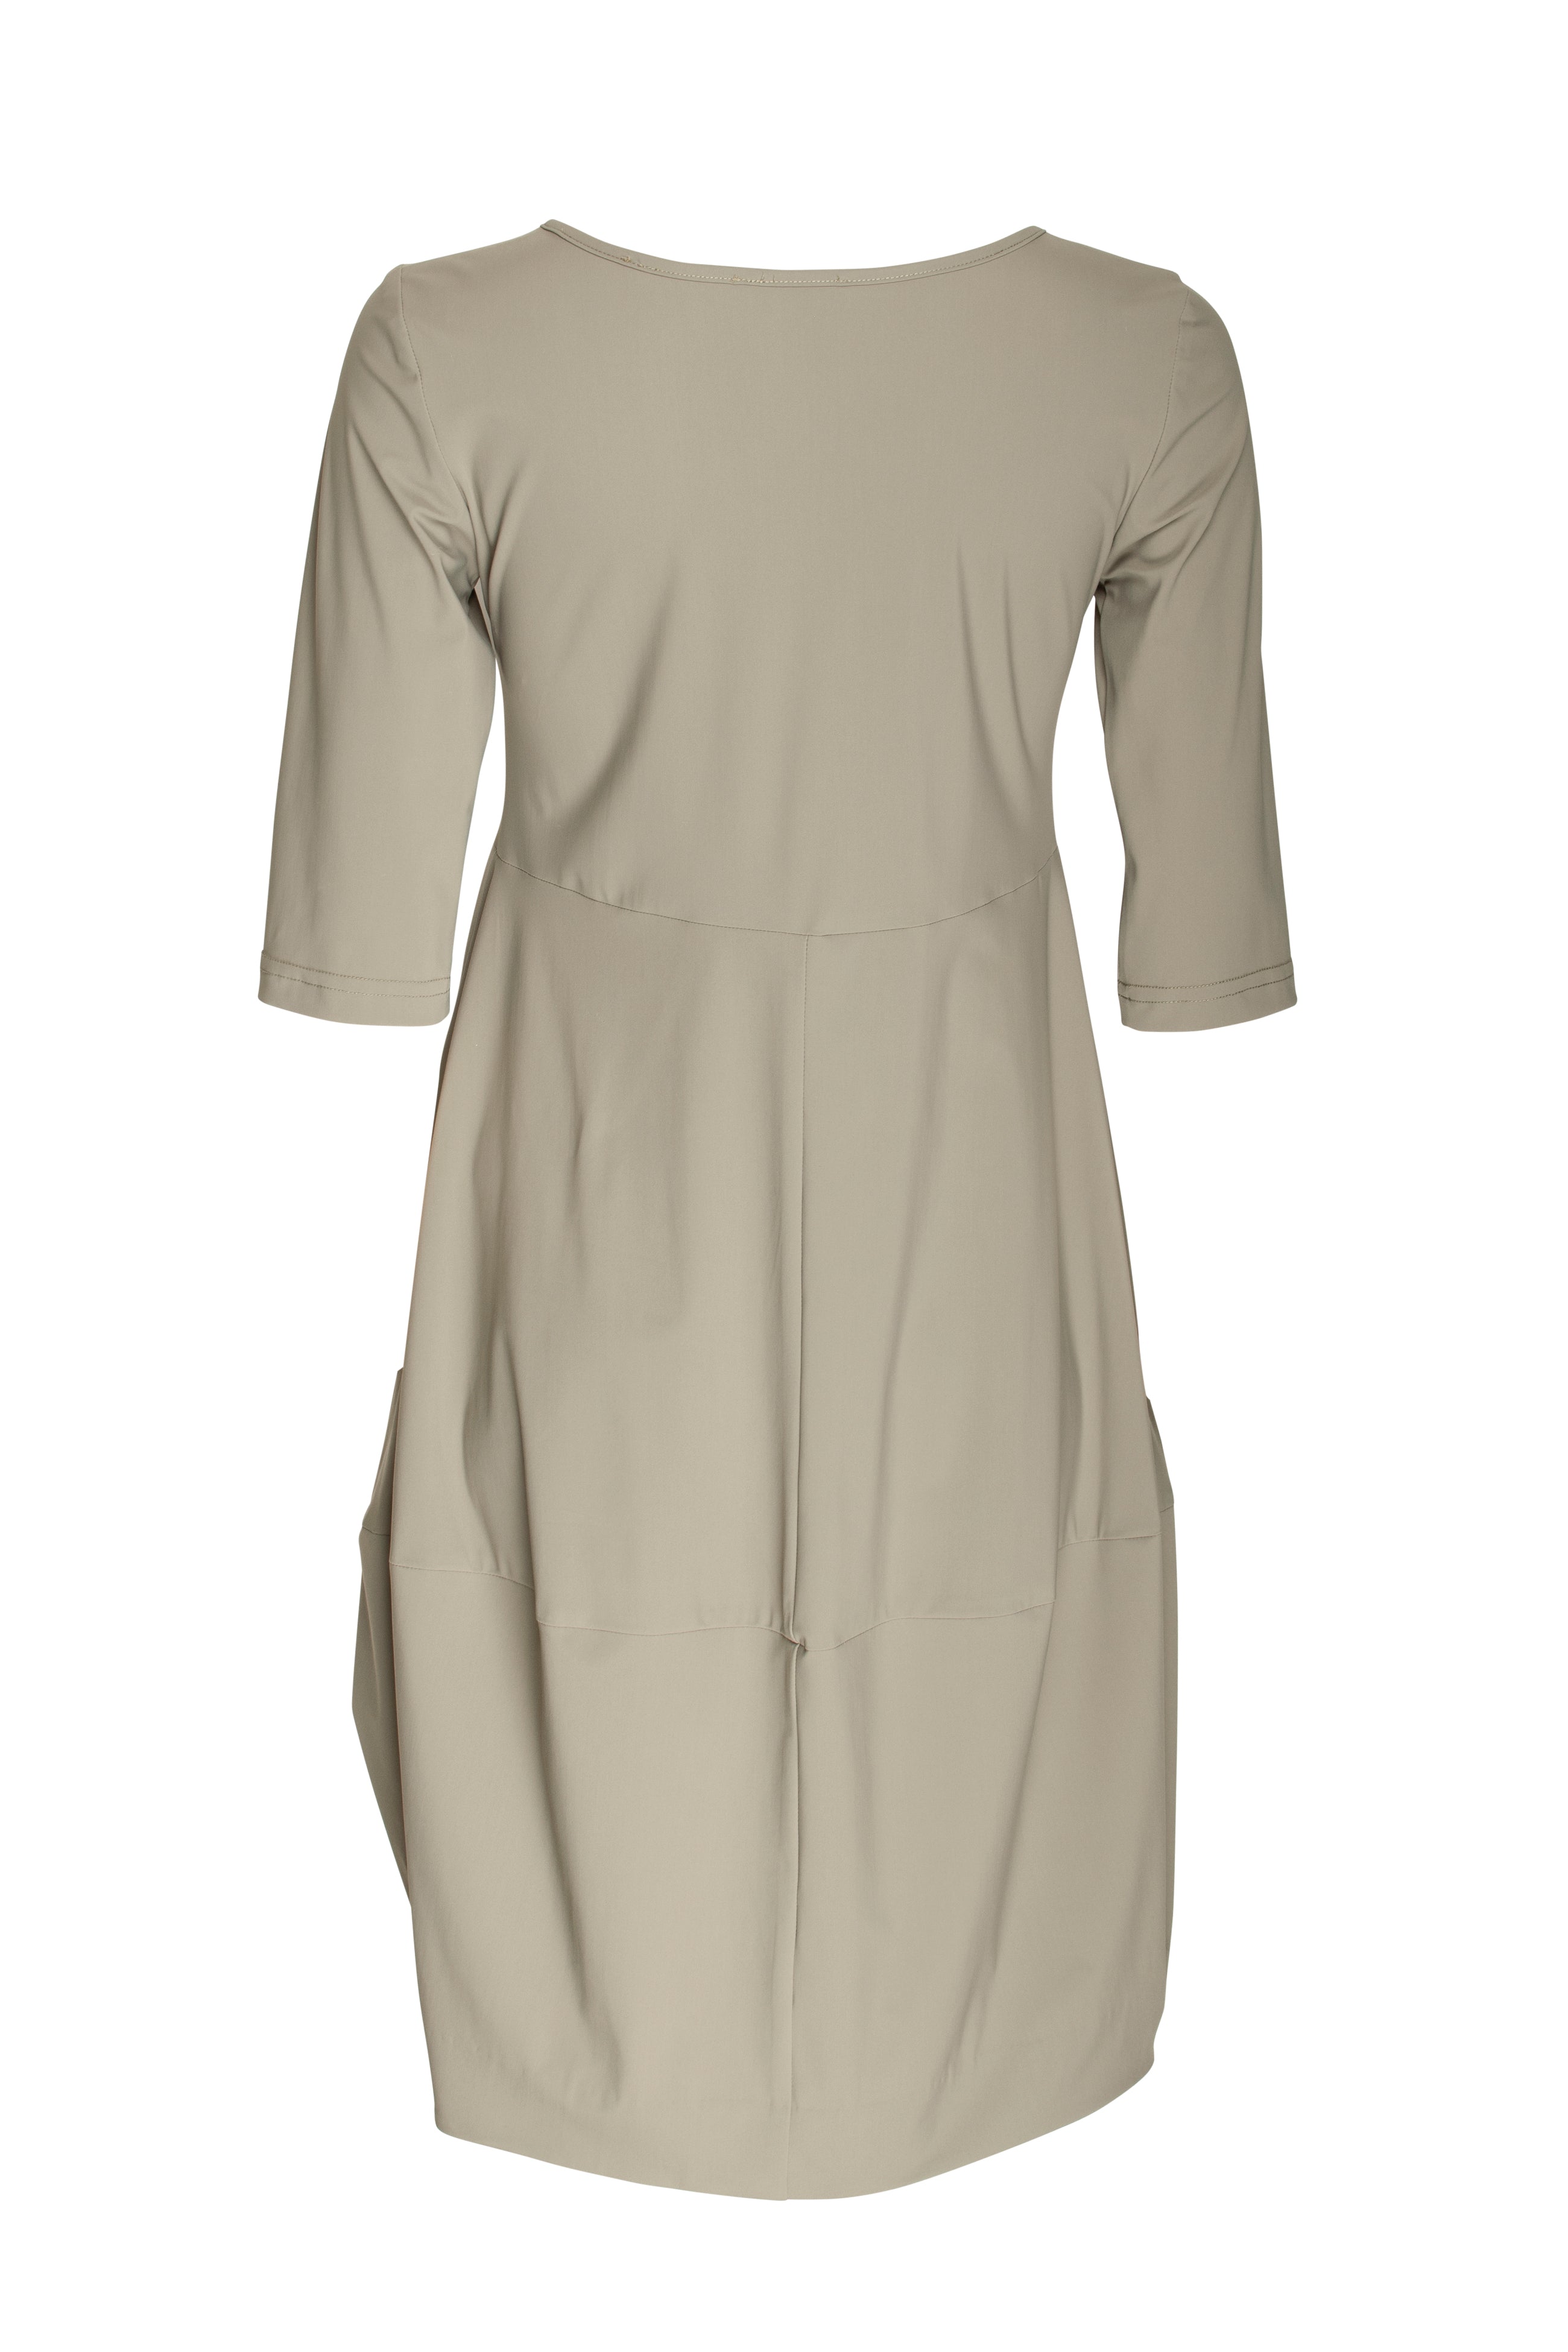 Short Sleeve Panel Hem Dress - Eucalypt Jersey 5045